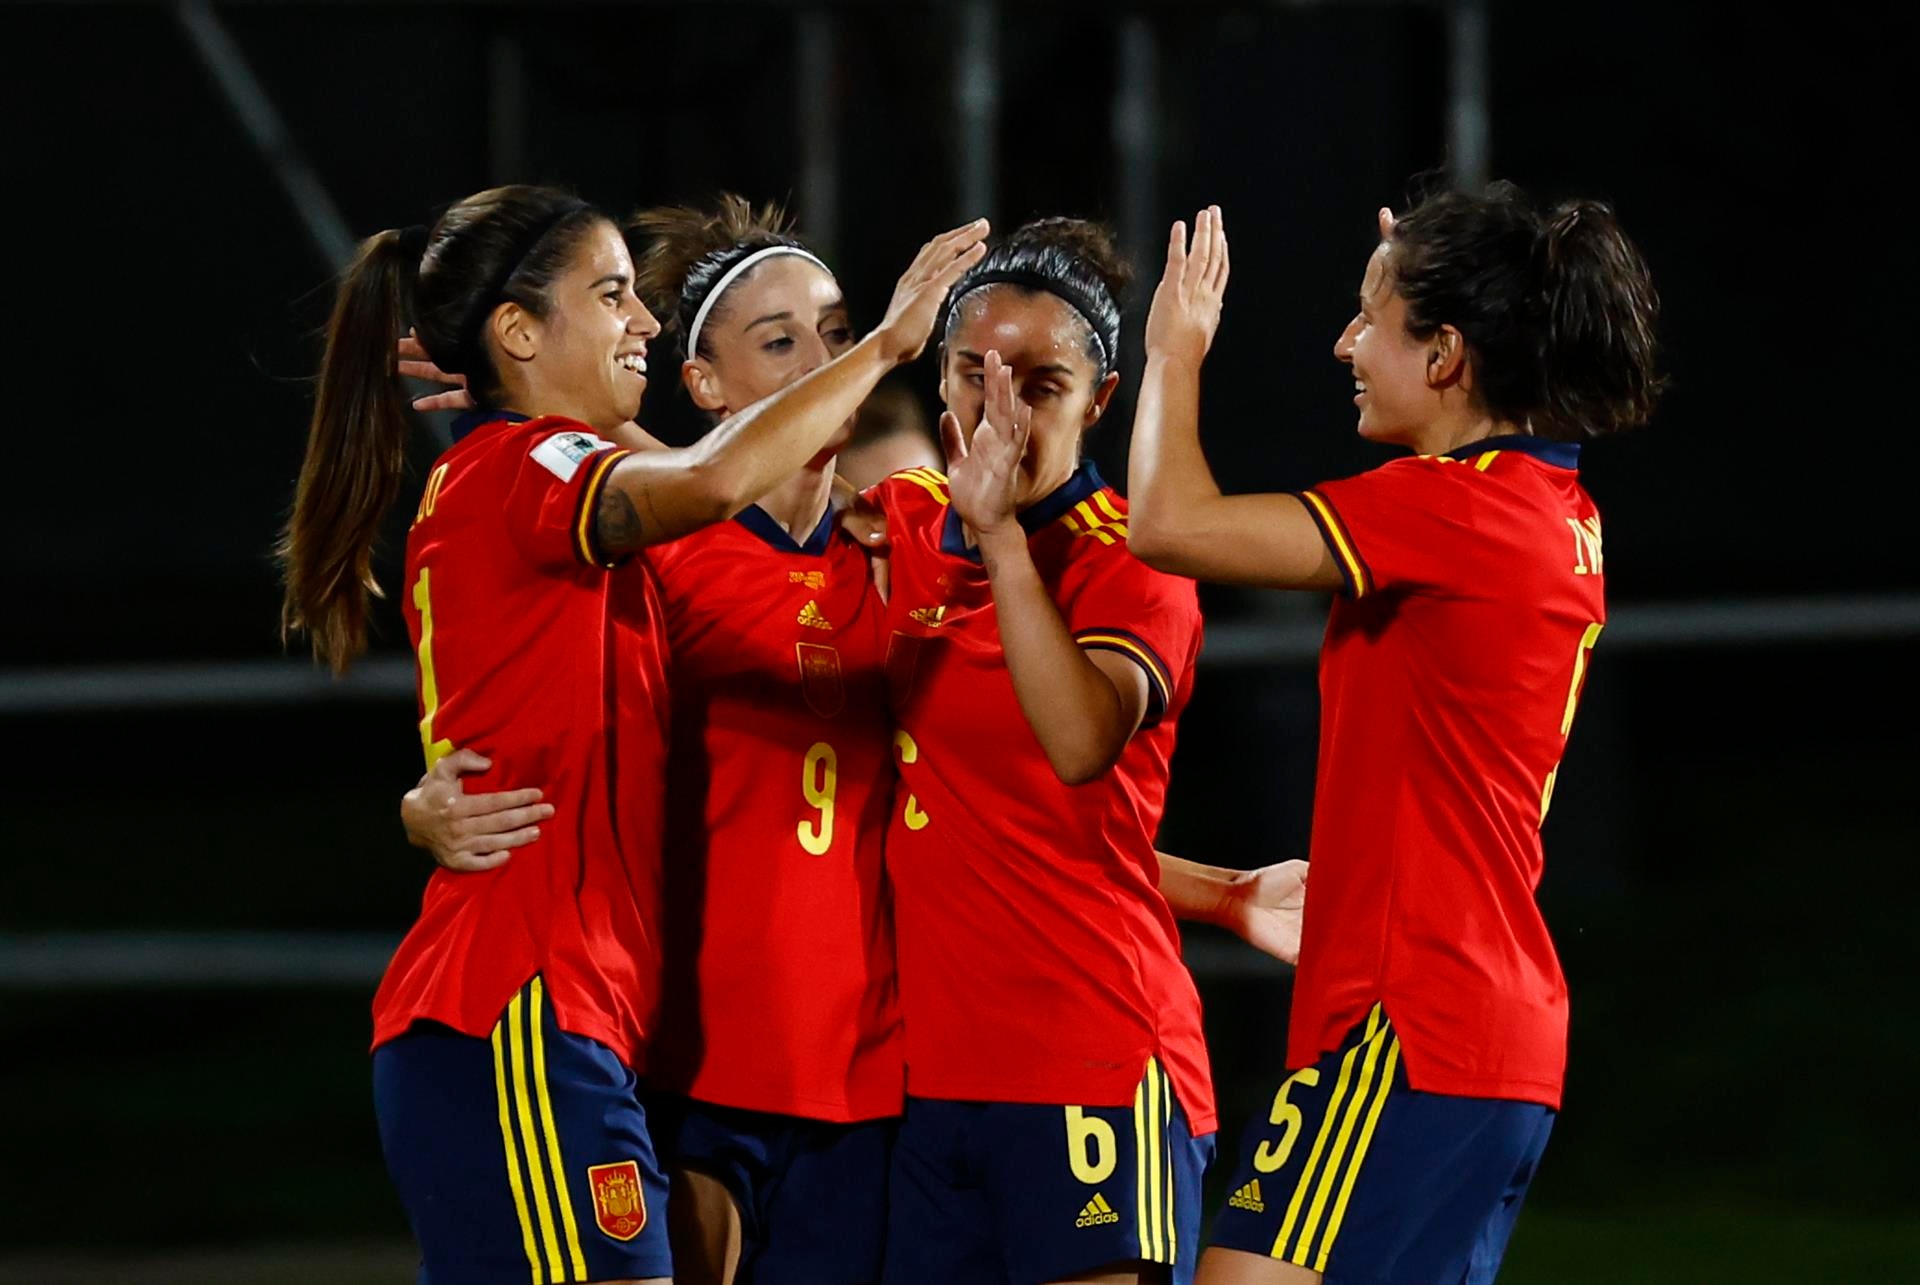 Laia Codina debutó y marcó un gol histórico con España: 